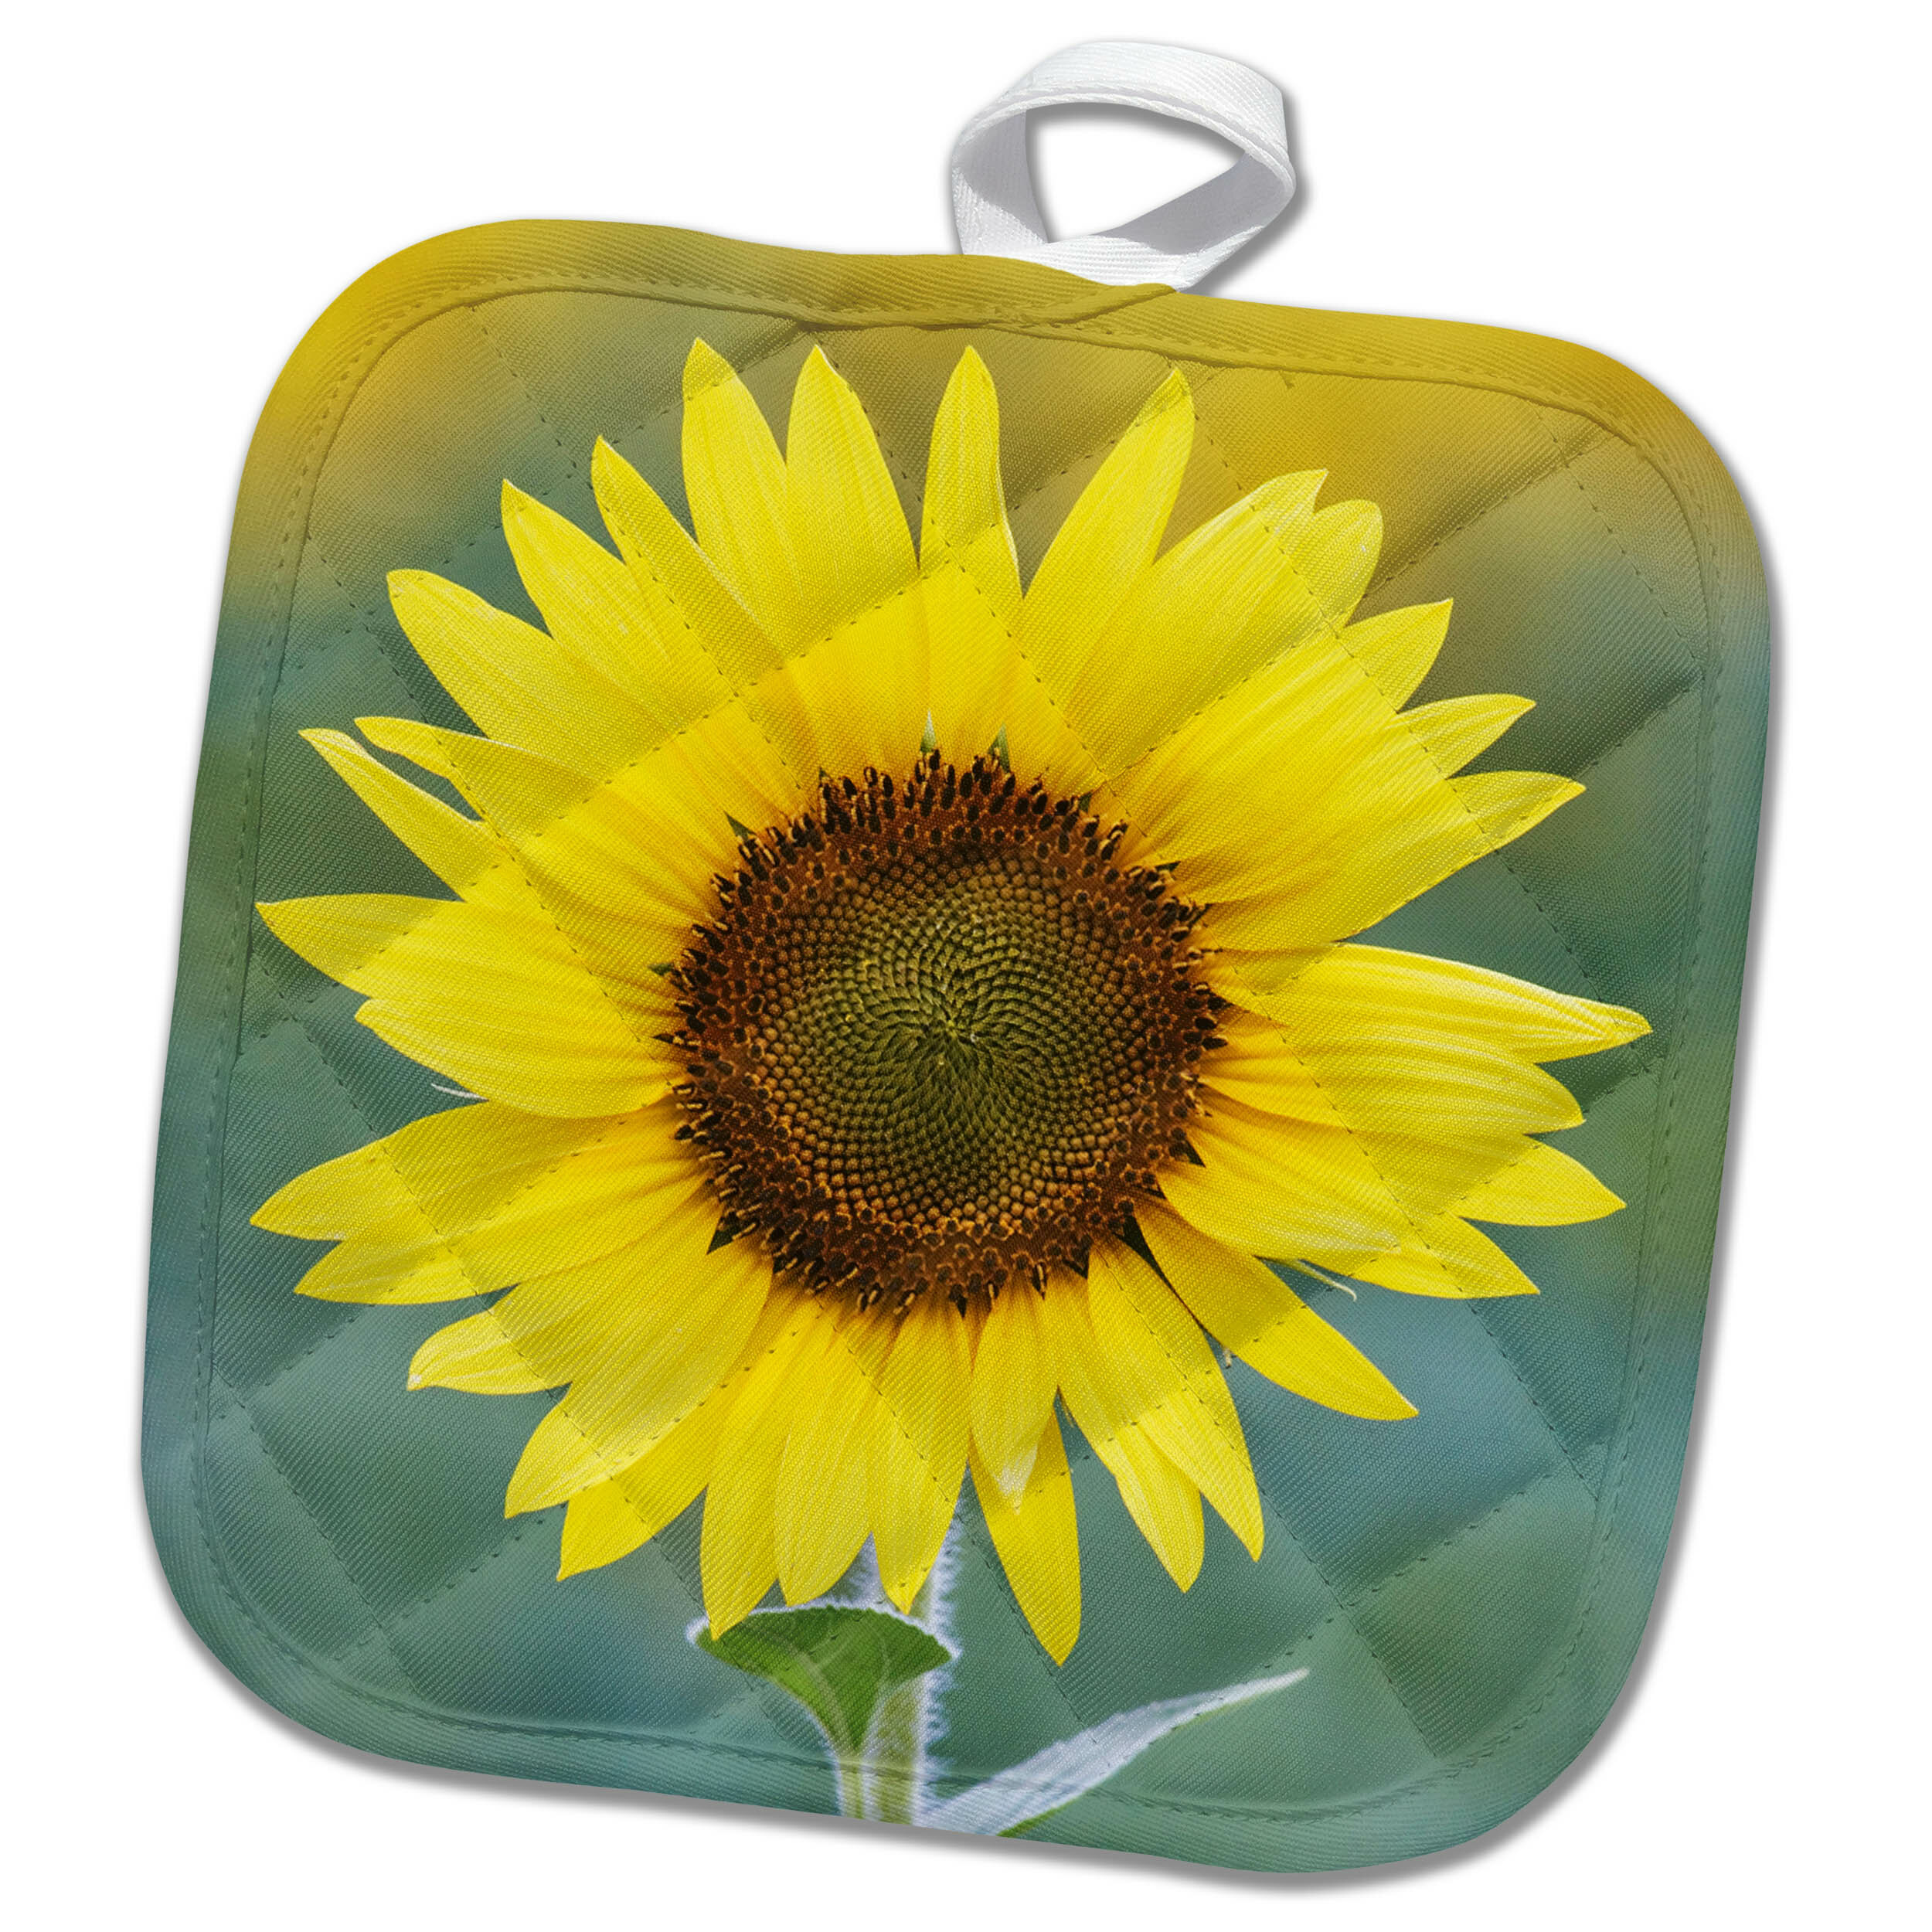 Download 3drose Usa California Napa Valley Close Up Of Sunflower Potholder Wayfair